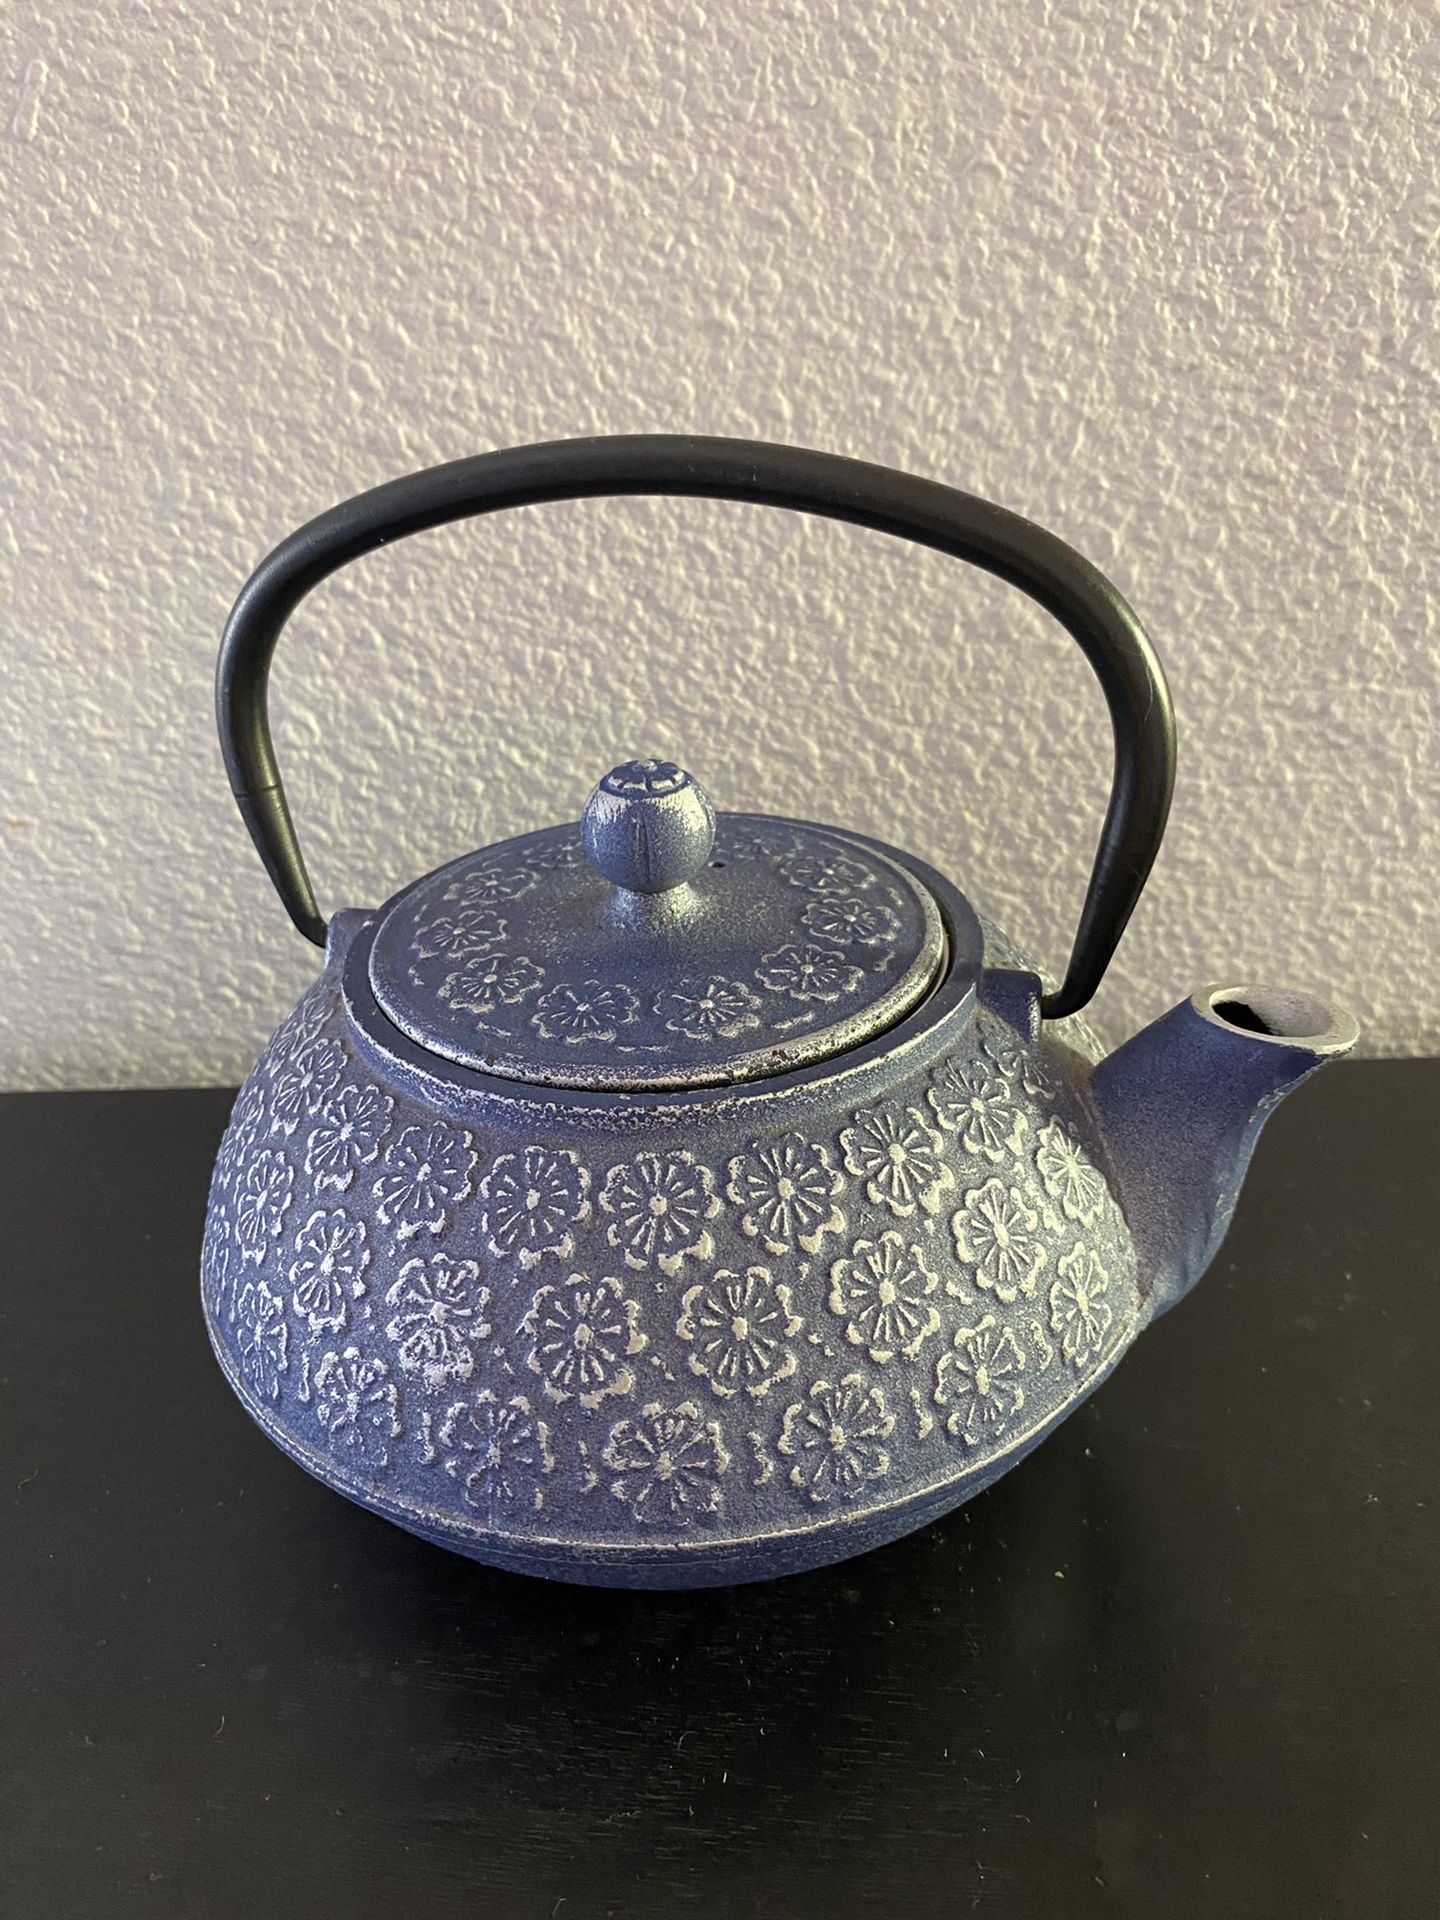 Heavy tea pot